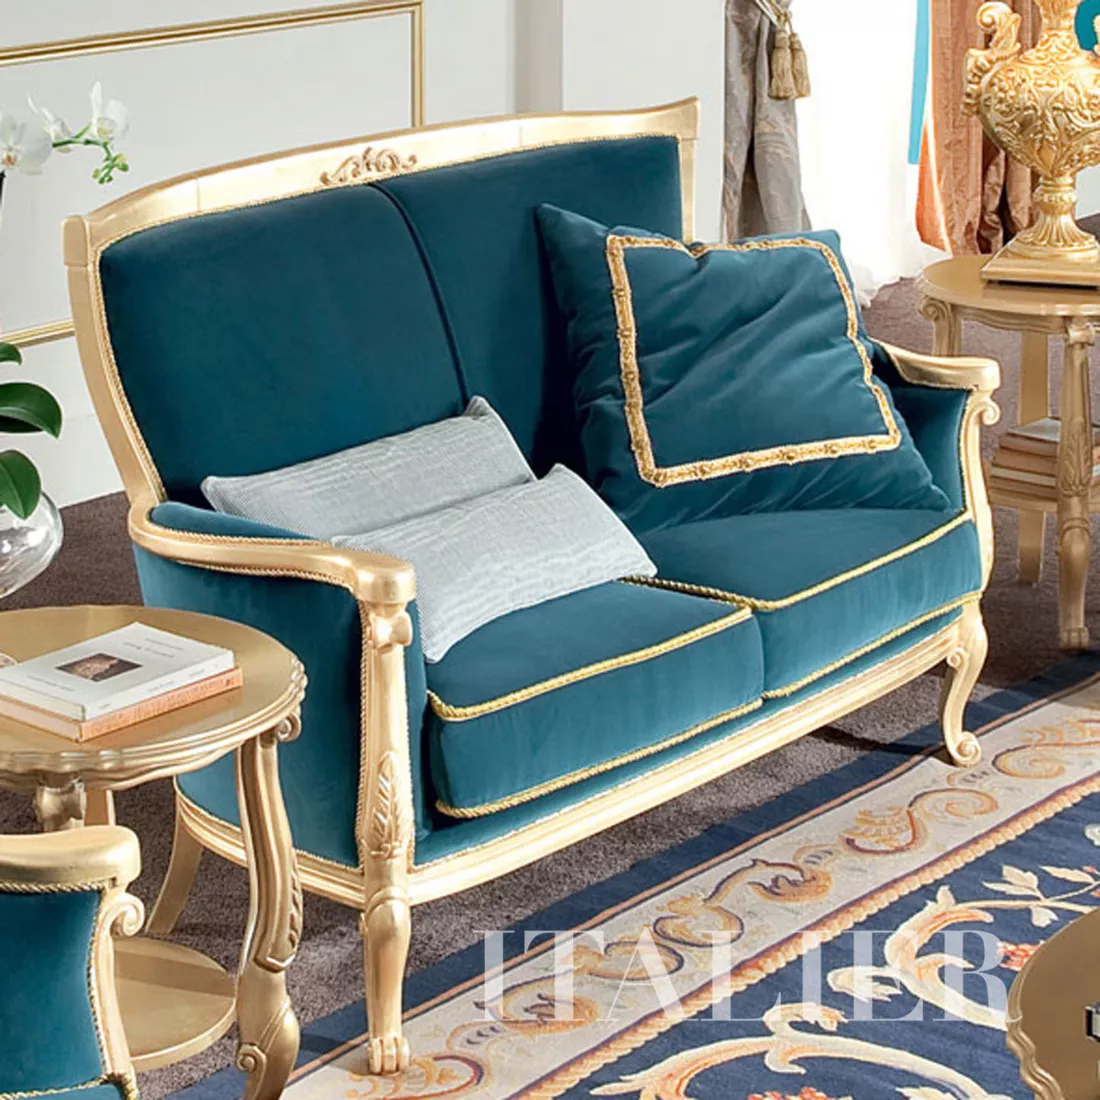 Deluxe-living-room-classic-home-furnishing-Bella-Vita-collection-Modenese-Gastonerfewd